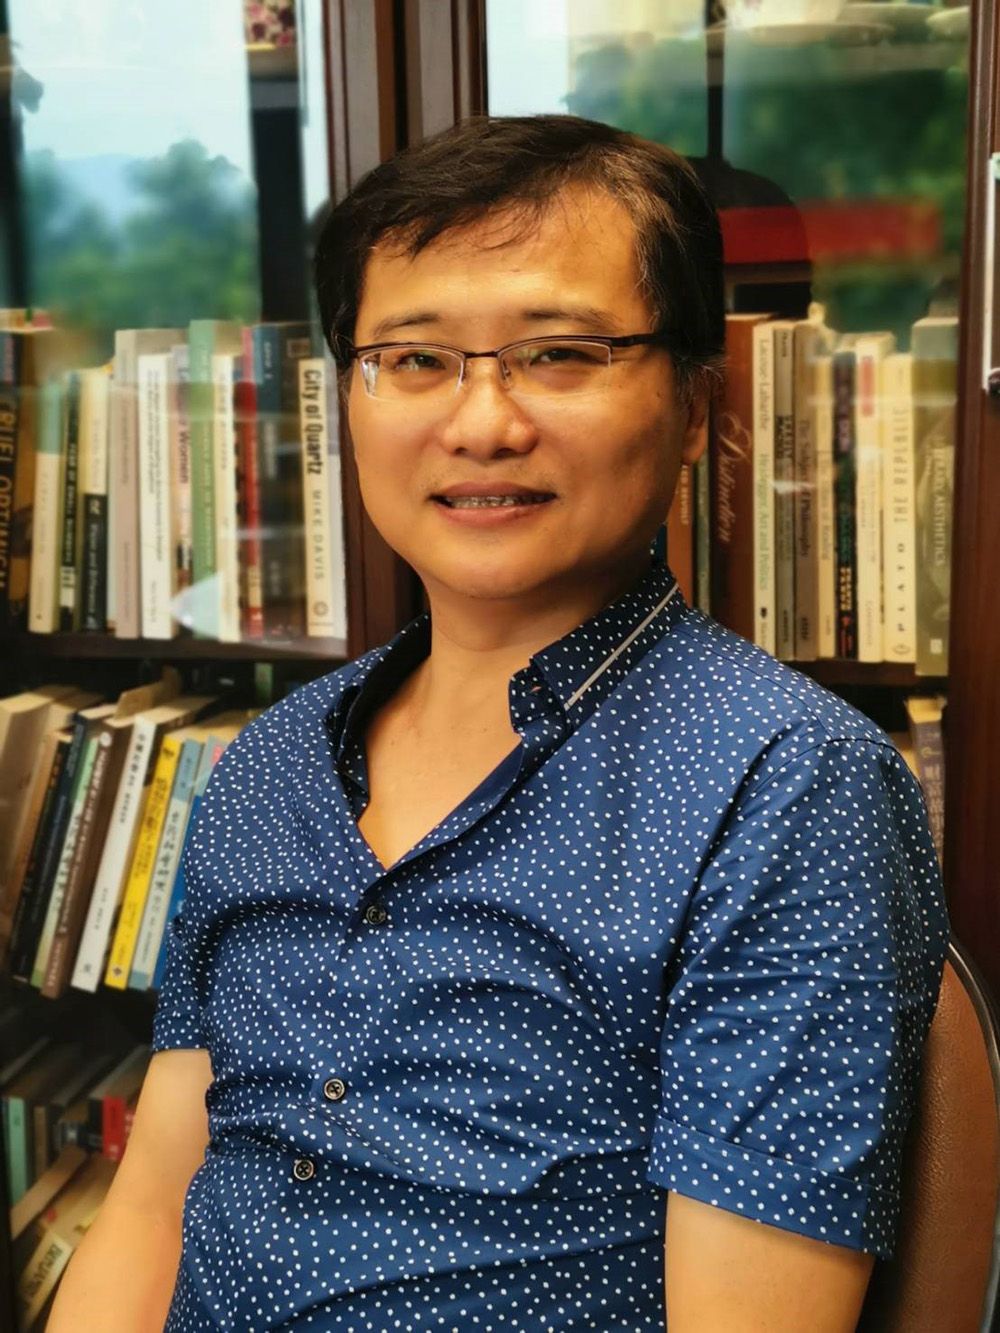 Prof. Jinn-Yuh Hsu is awarded the Ashby Prize 2018.